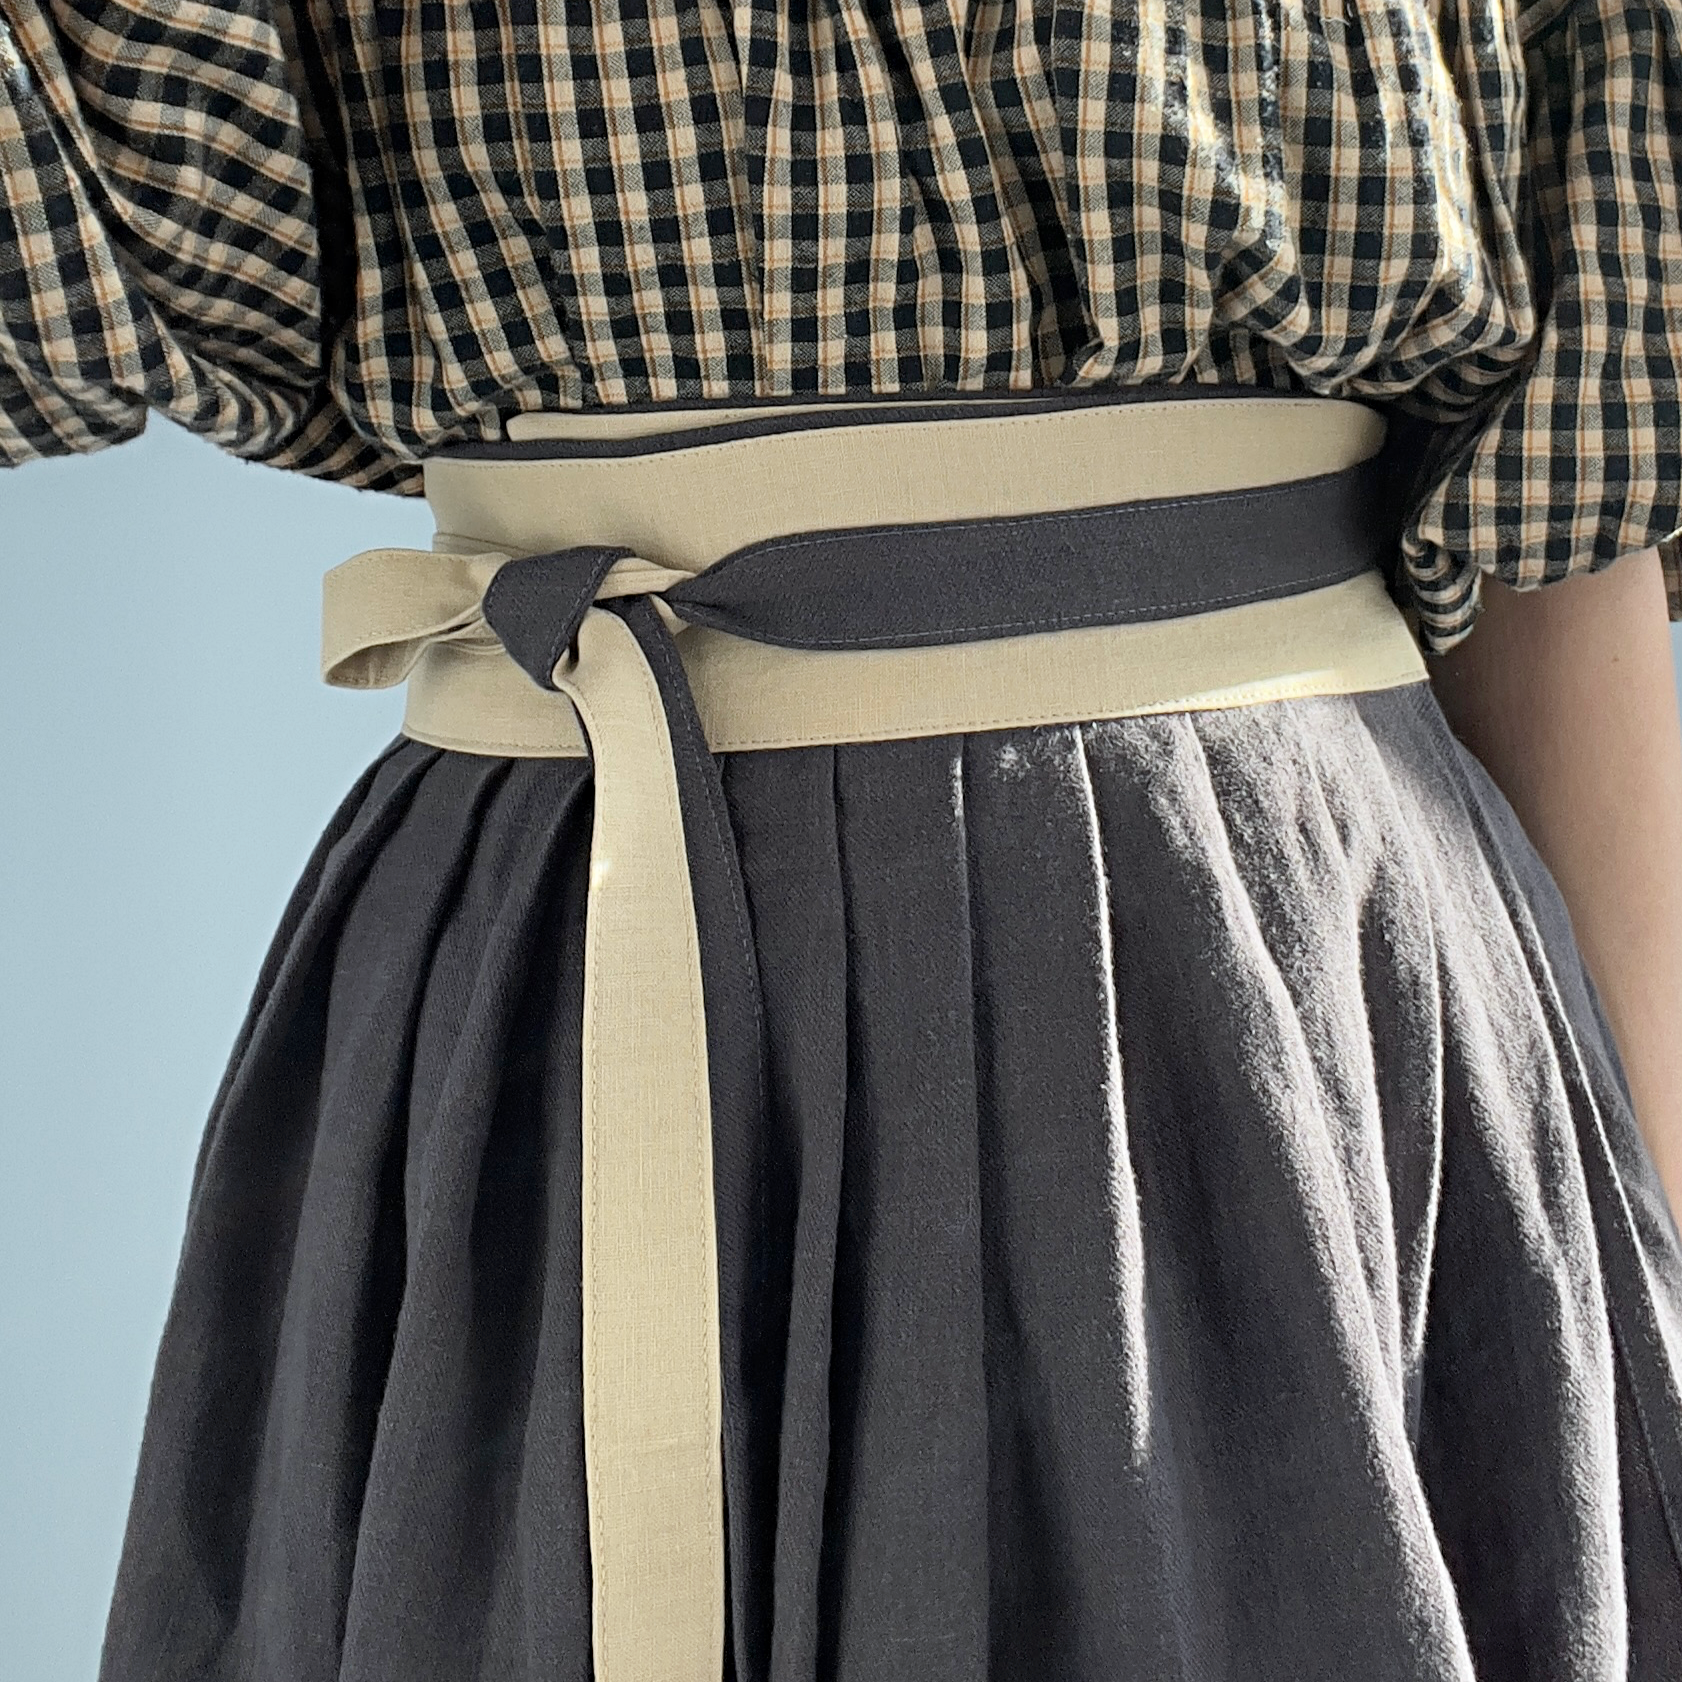 Leather wrap belt Obi belt for women Wide Waist Band Handmade (Black, XS)  at  Women's Clothing store